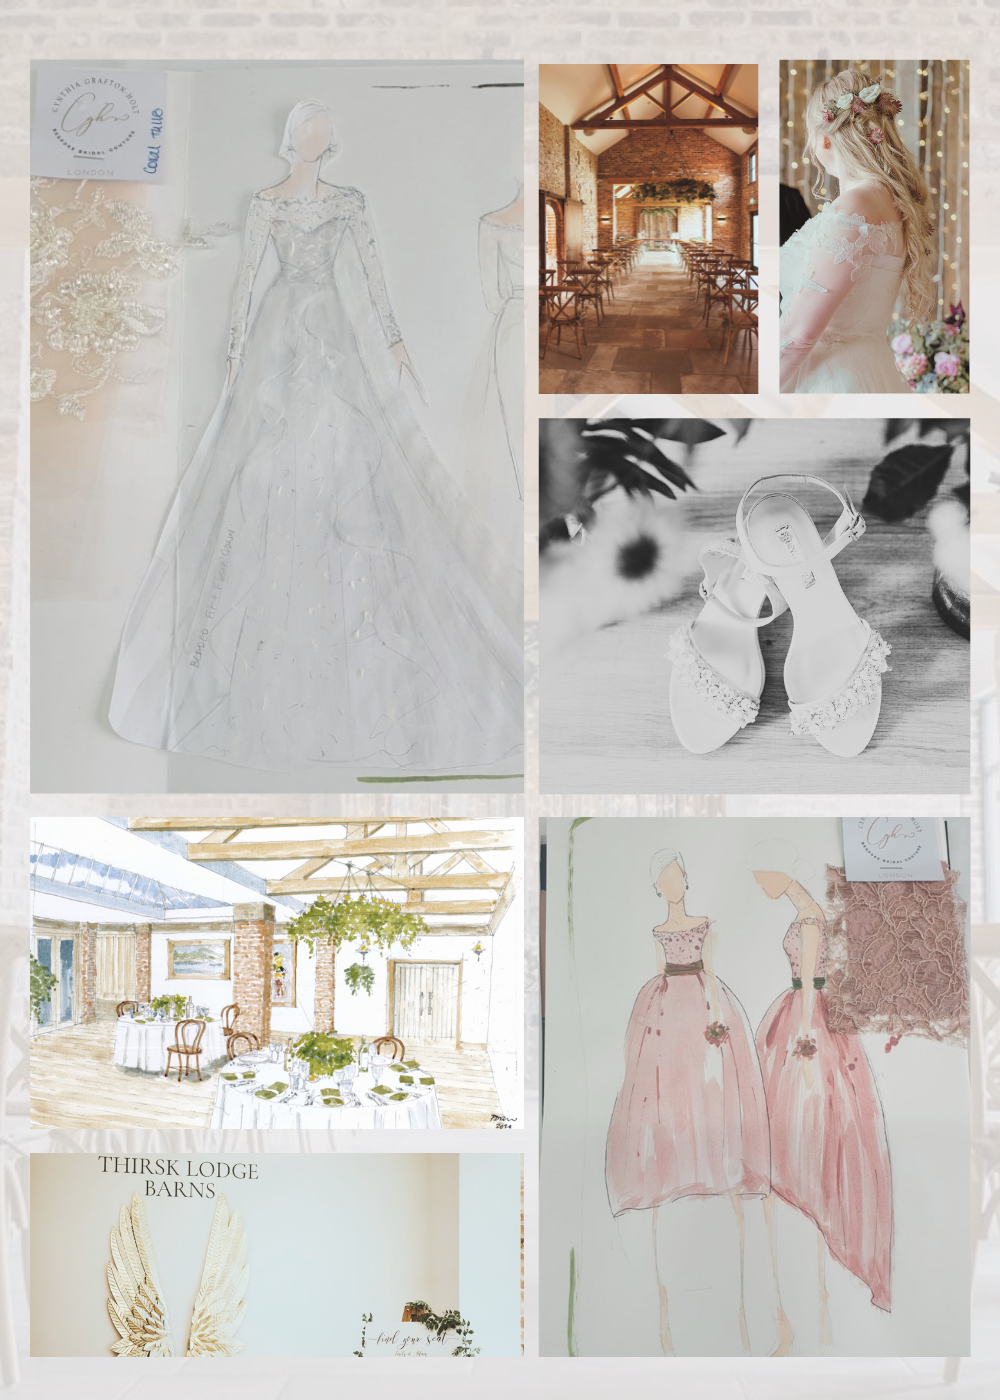 Pre wedding dress maker designs and sketches